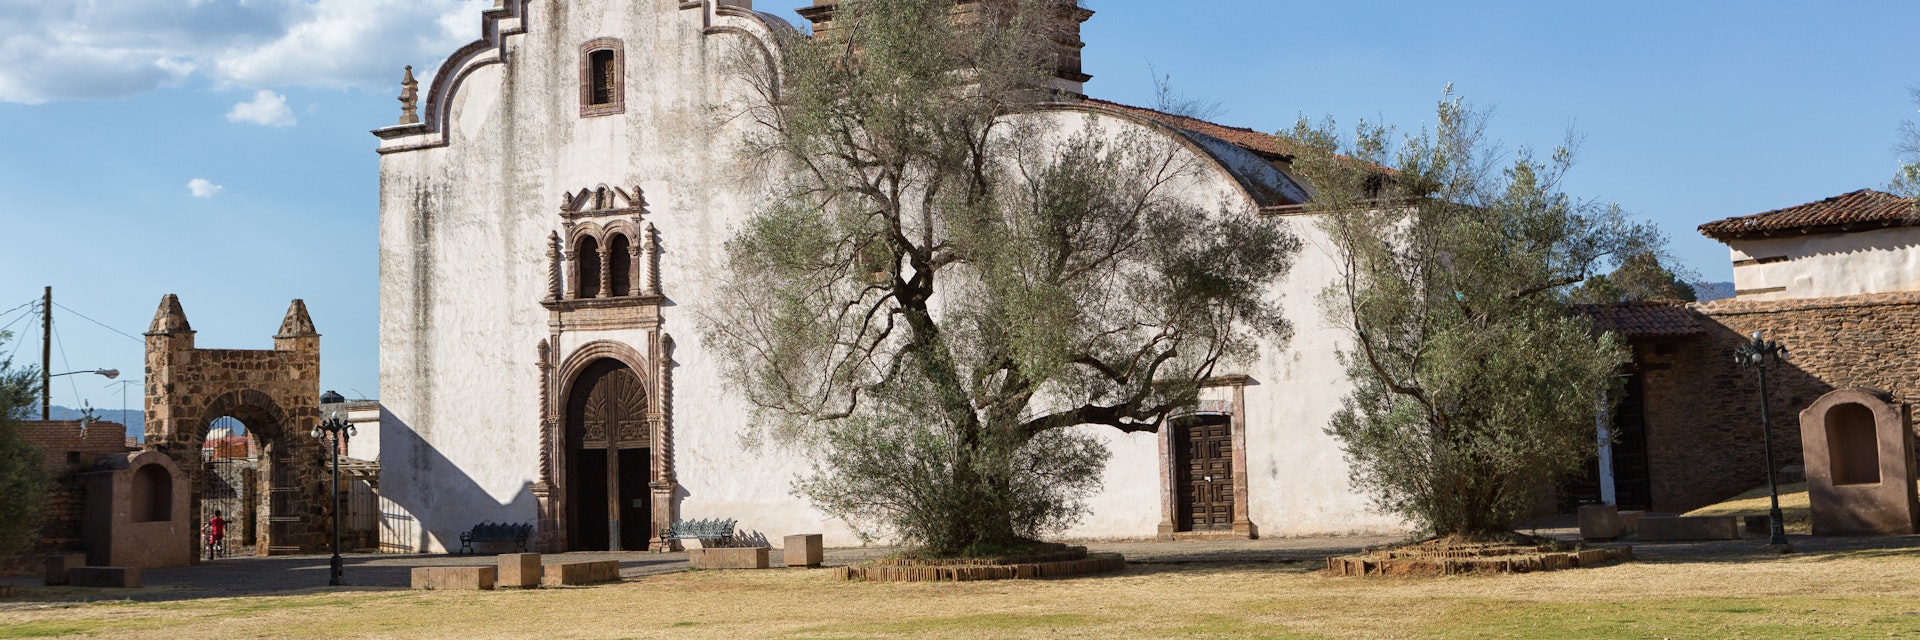 The San Francisco monastery in Tzintzuntzan Mexico, which houses the Museo Antiguo Convento Franciscano de Santa Ana.